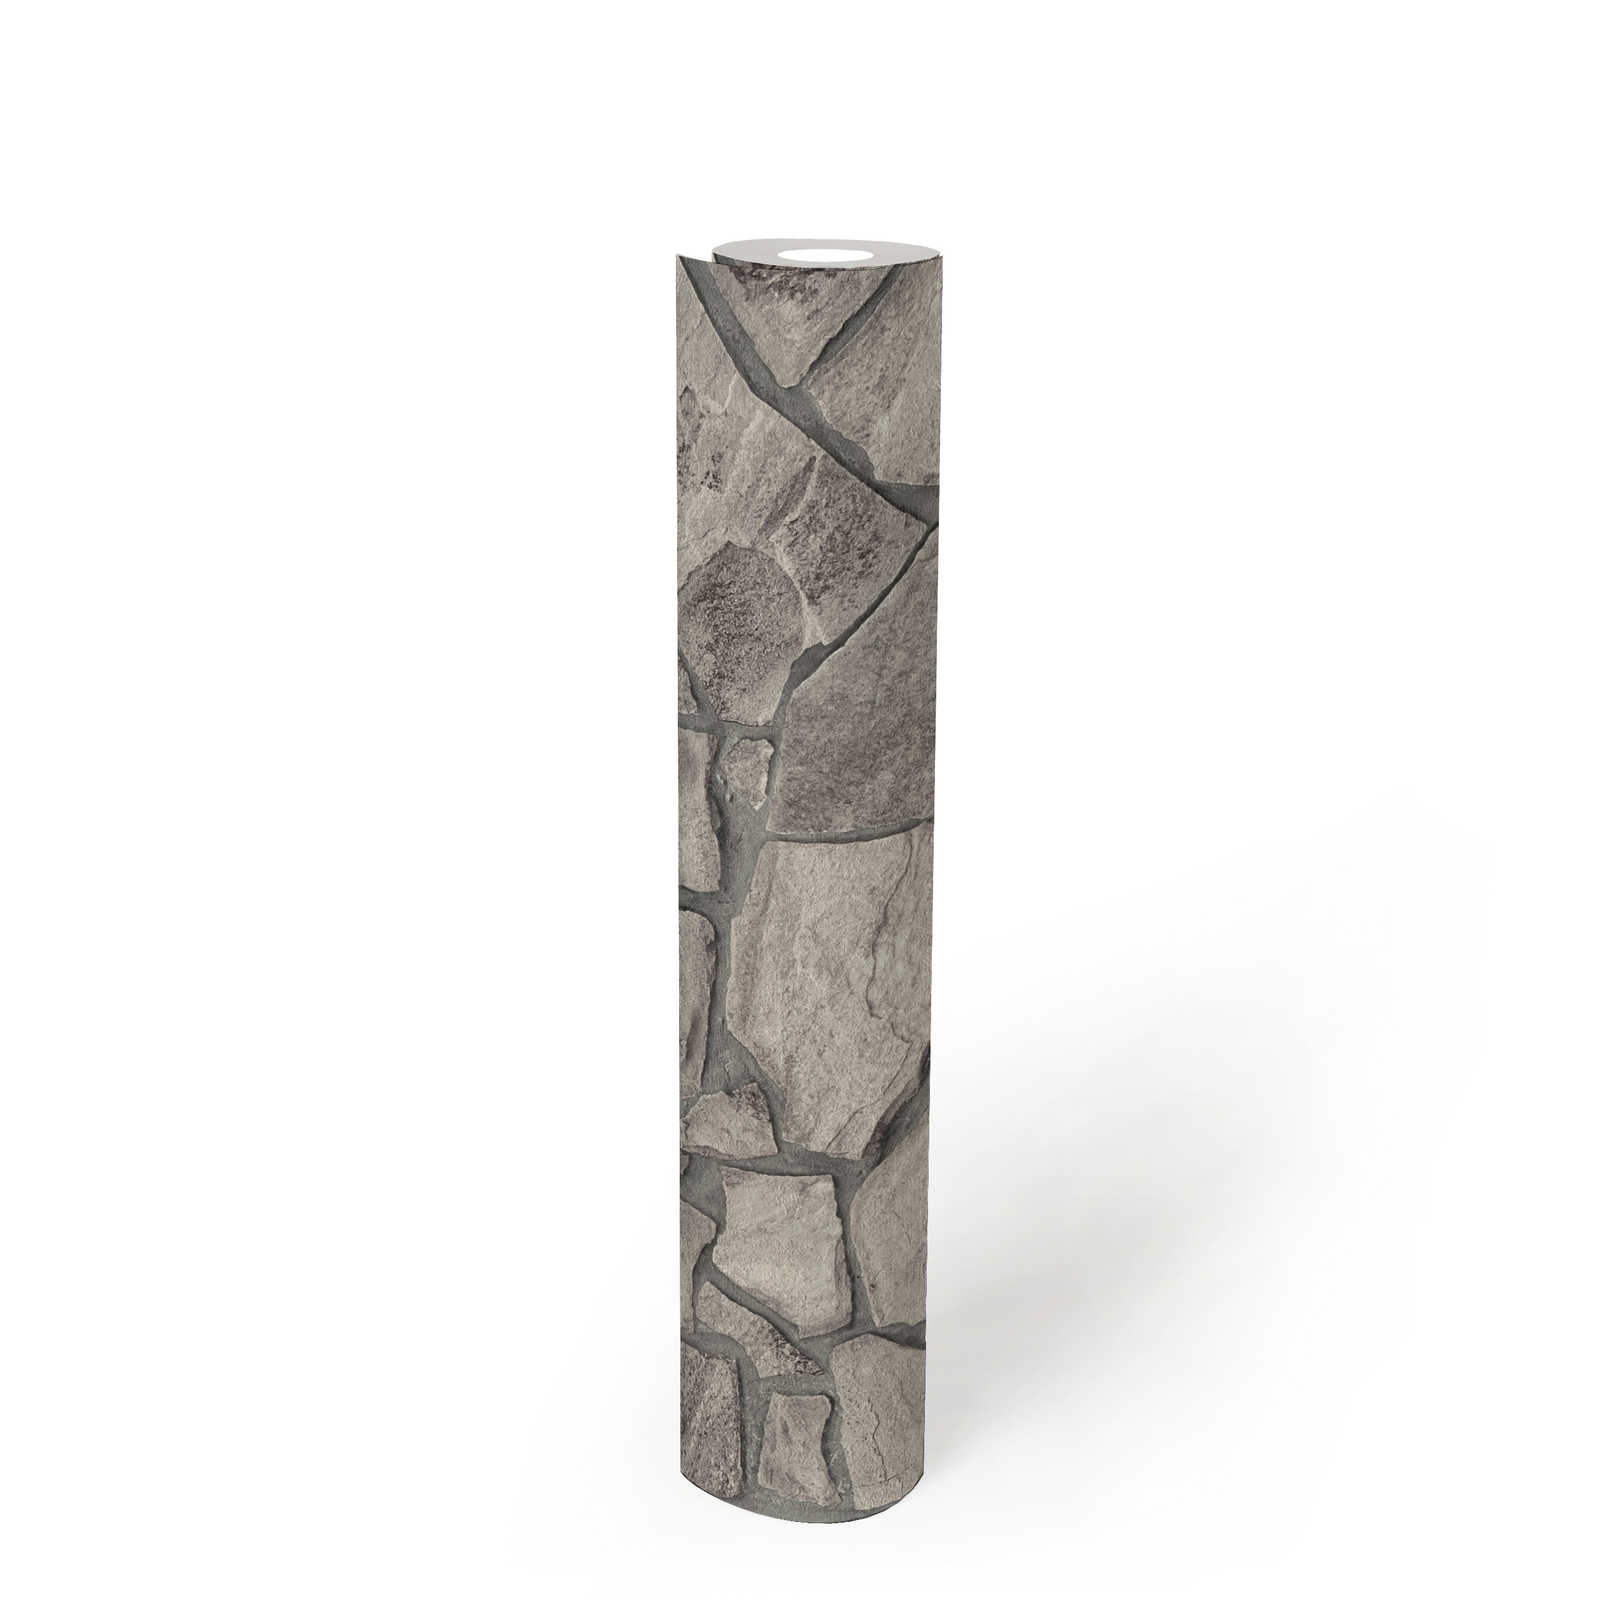             Papel pintado no tejido de piedra natural 3D-óptico - gris, Gris
        